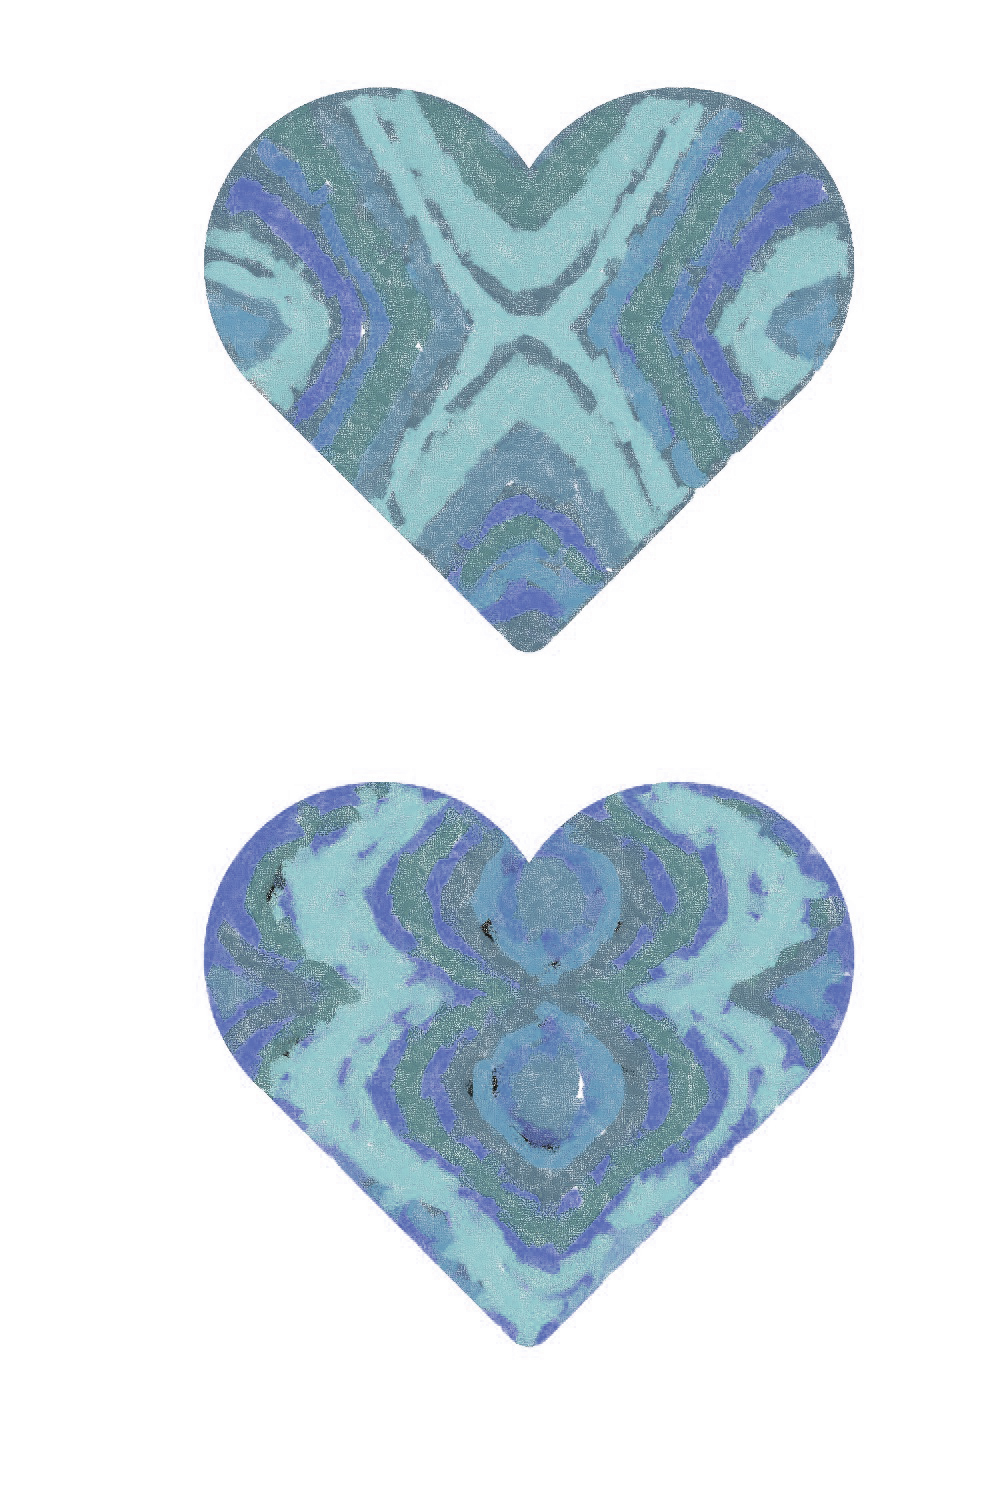 Dusty Blue Watercolor Valentine Heart Cutout Set of 8 pinterest preview image.